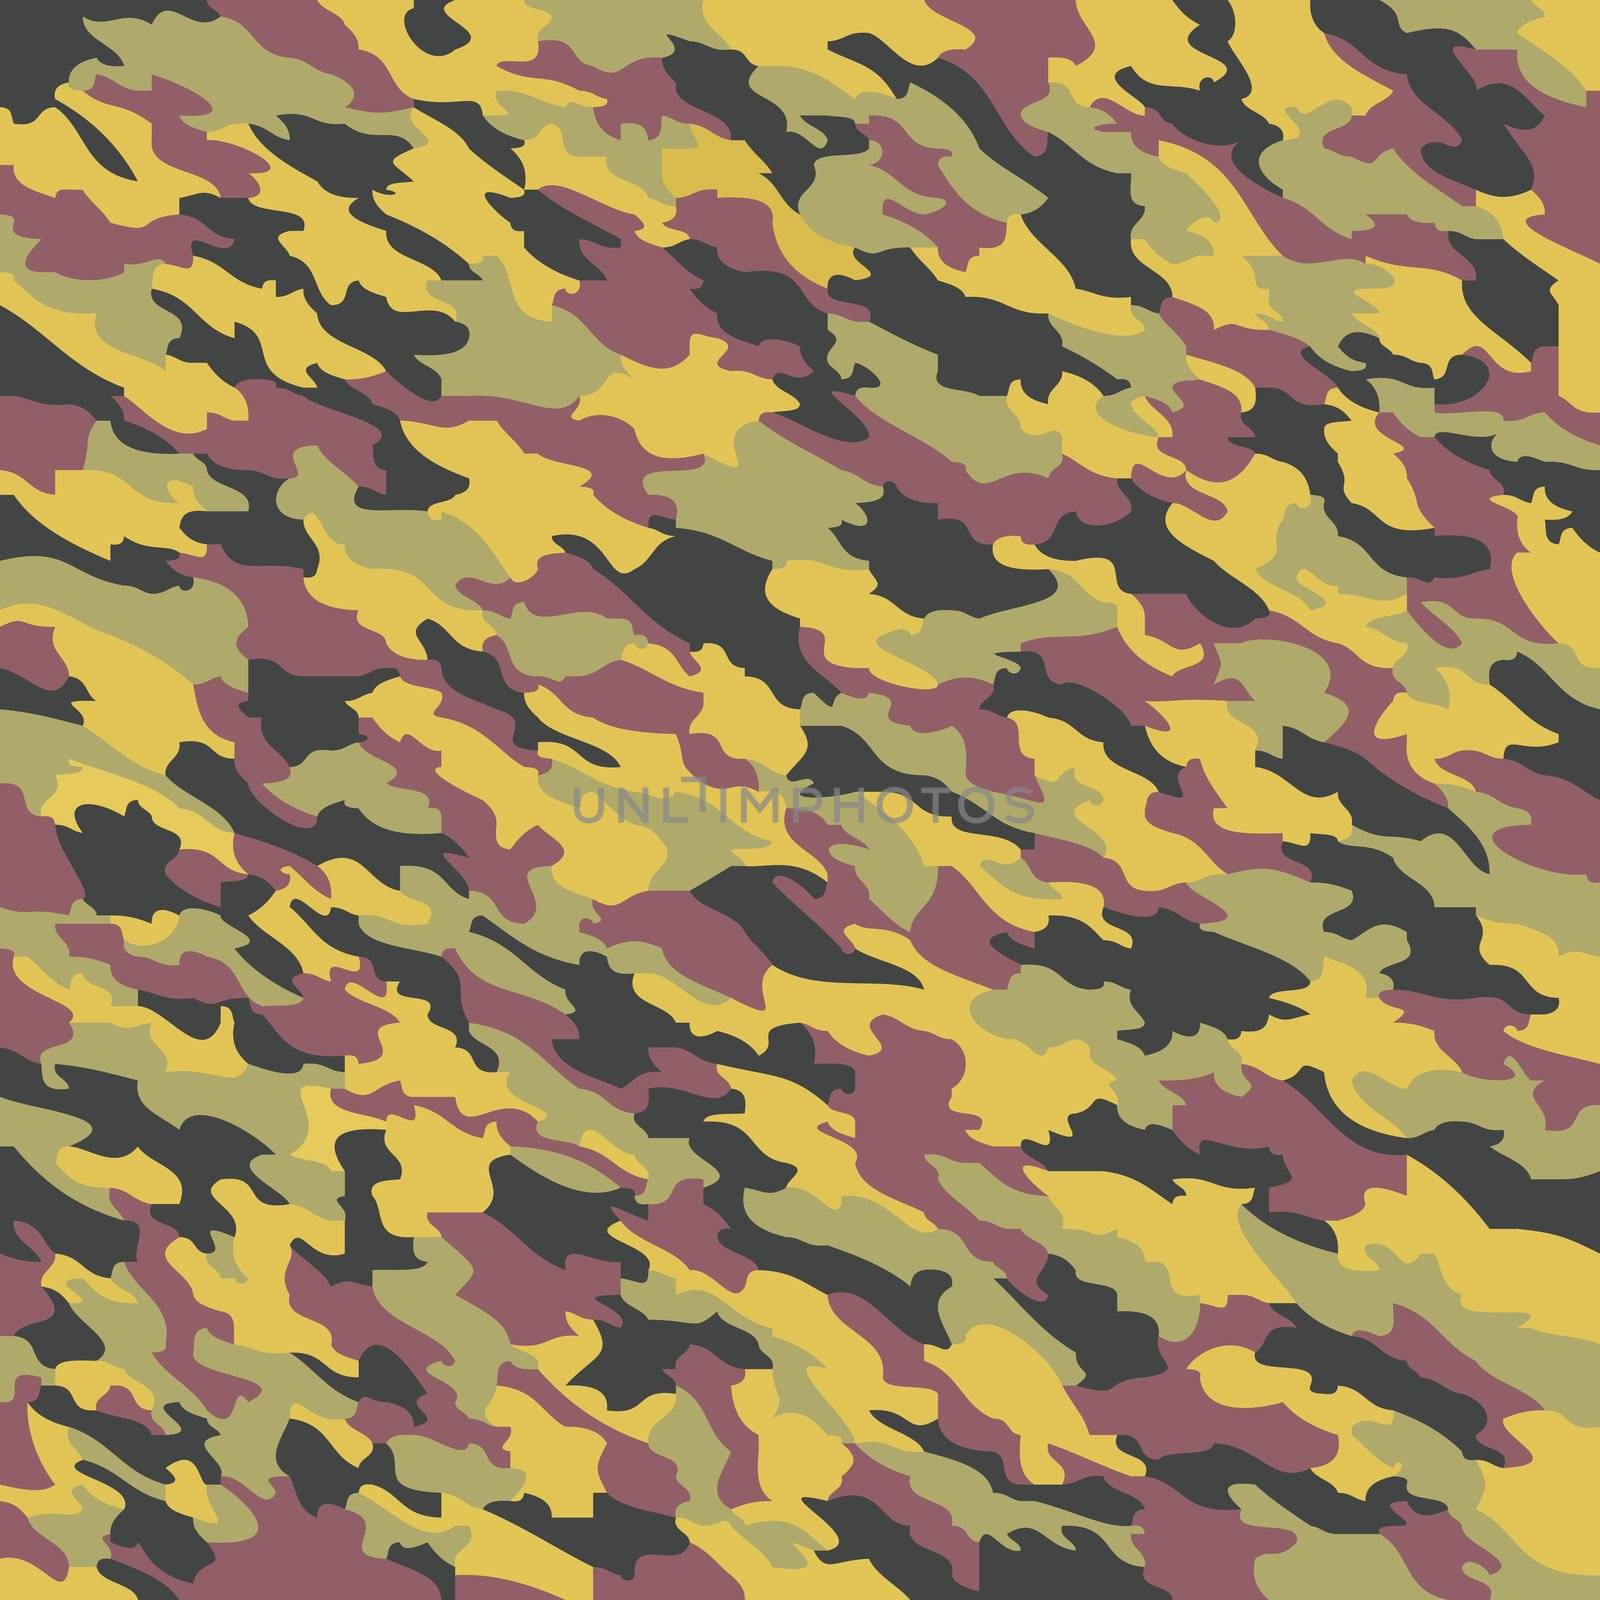 camouflage texture 2 by robertosch